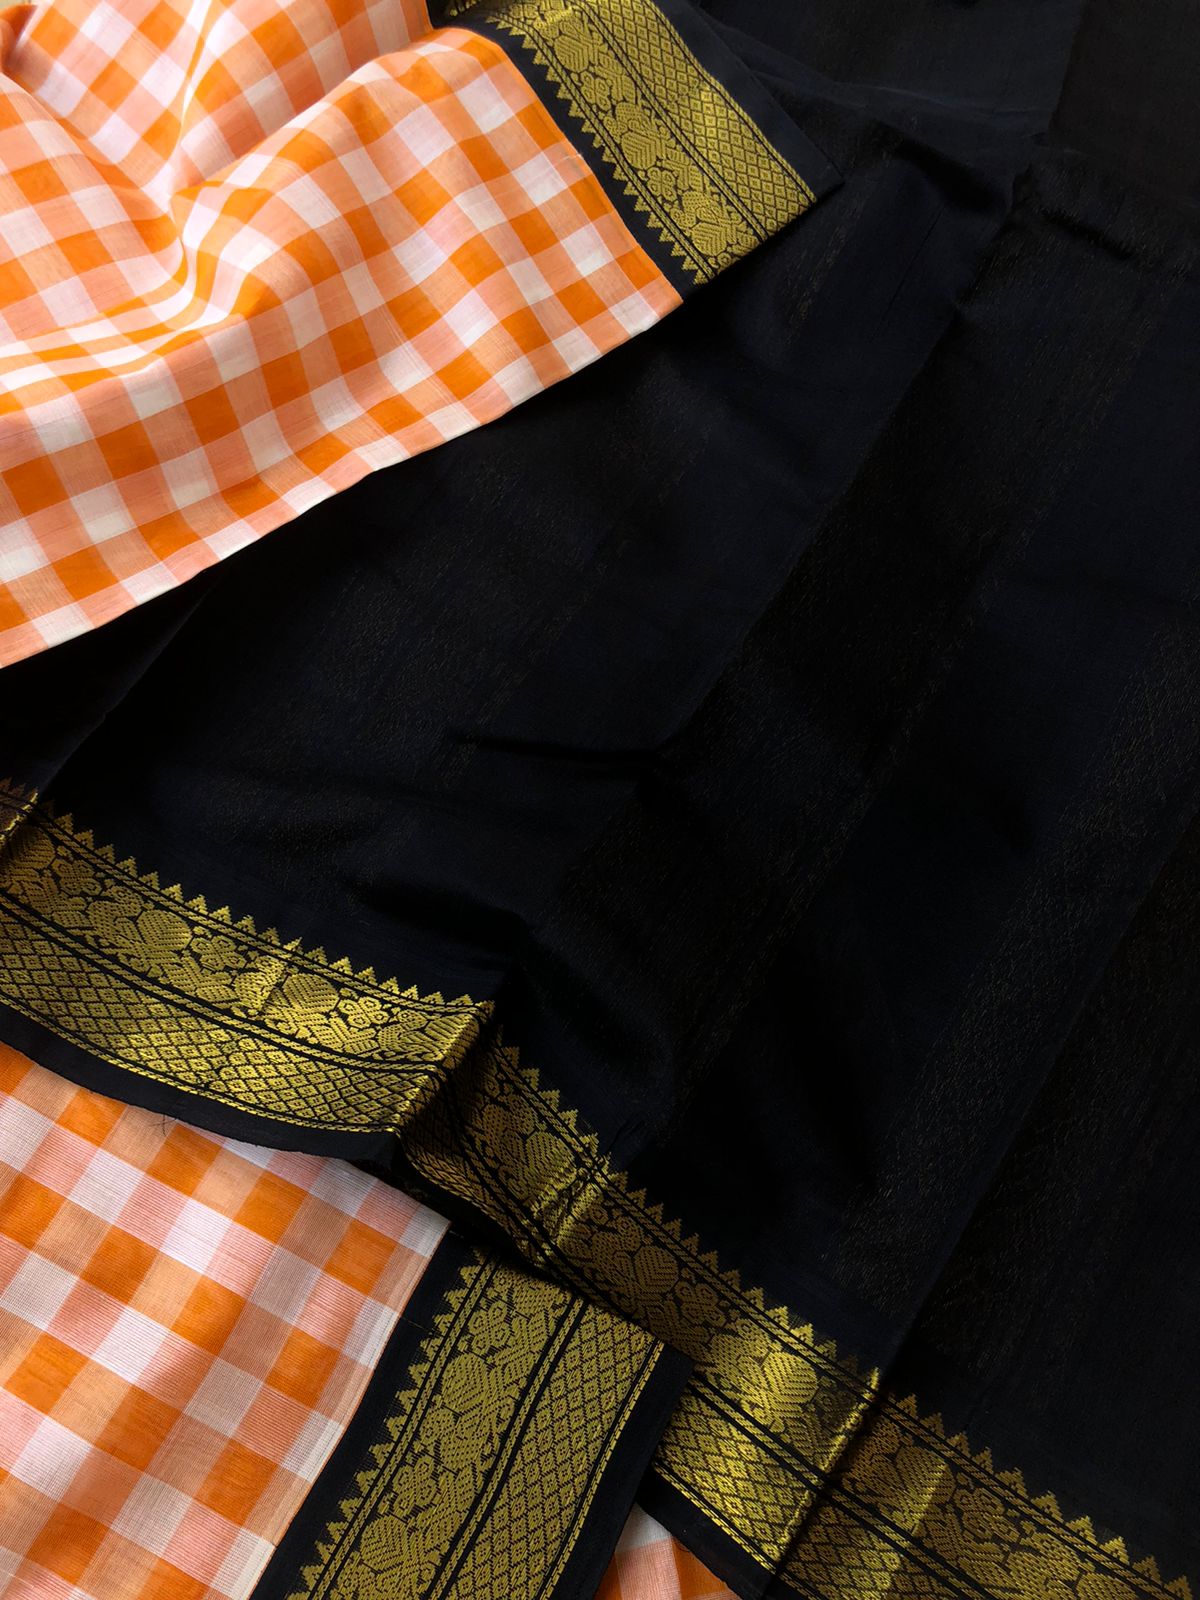 Paalum palamum kattam on Korvai Silk Cotton - off white and orange chexs with black borders pallu and blouse